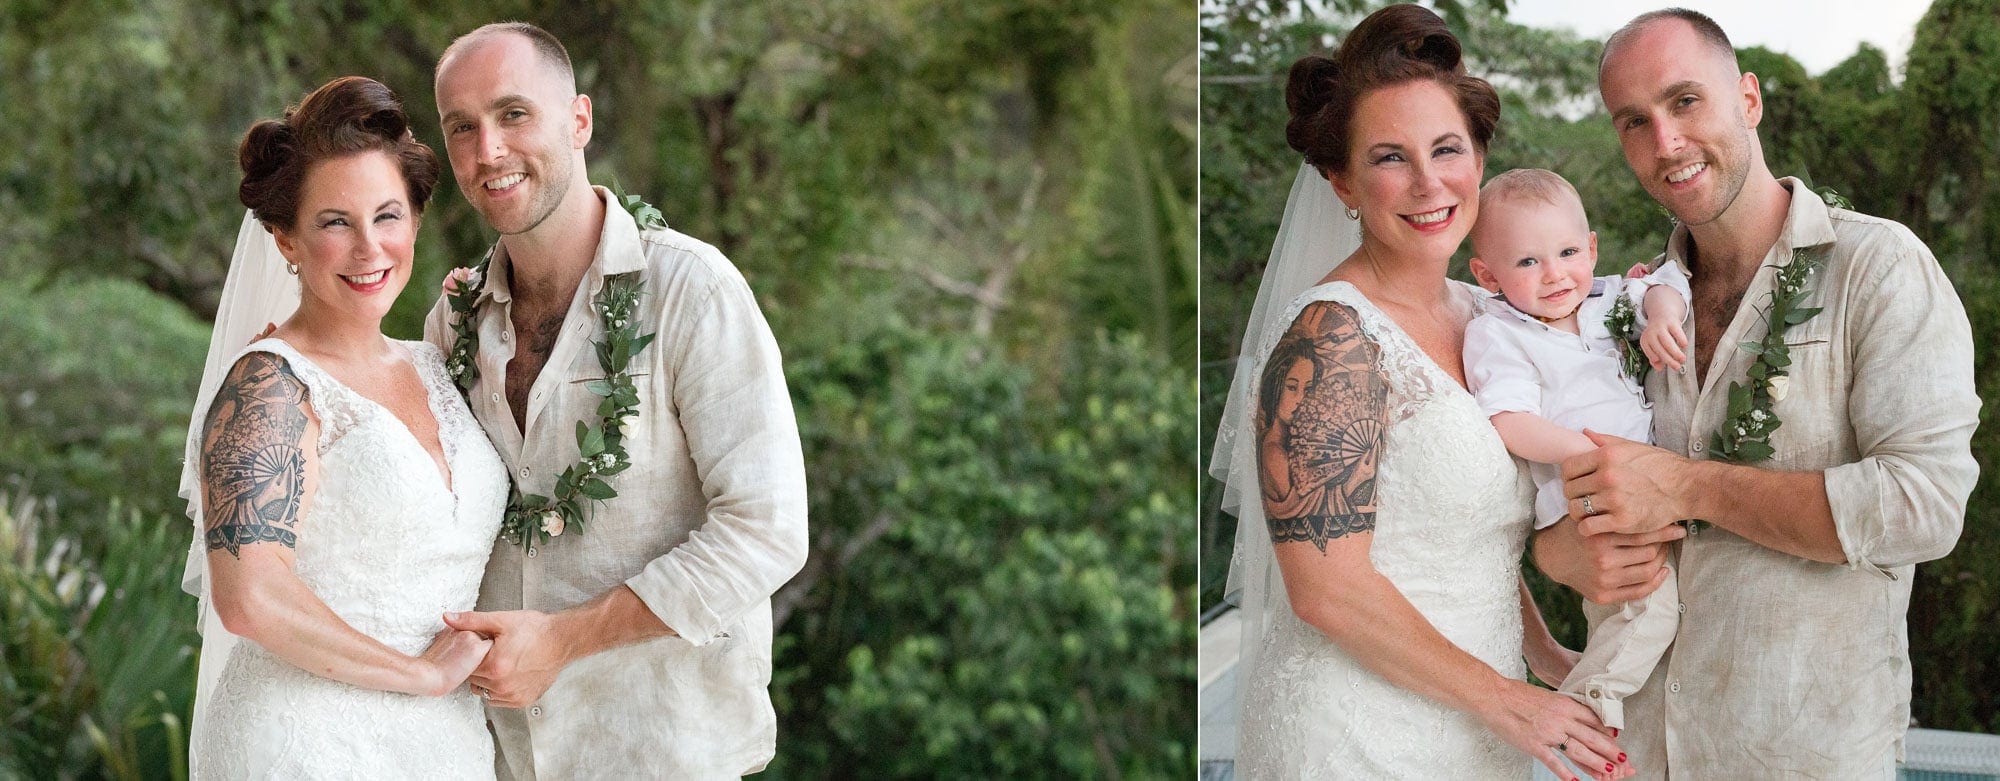 Bridal portraits after an emotional wedding ceremony